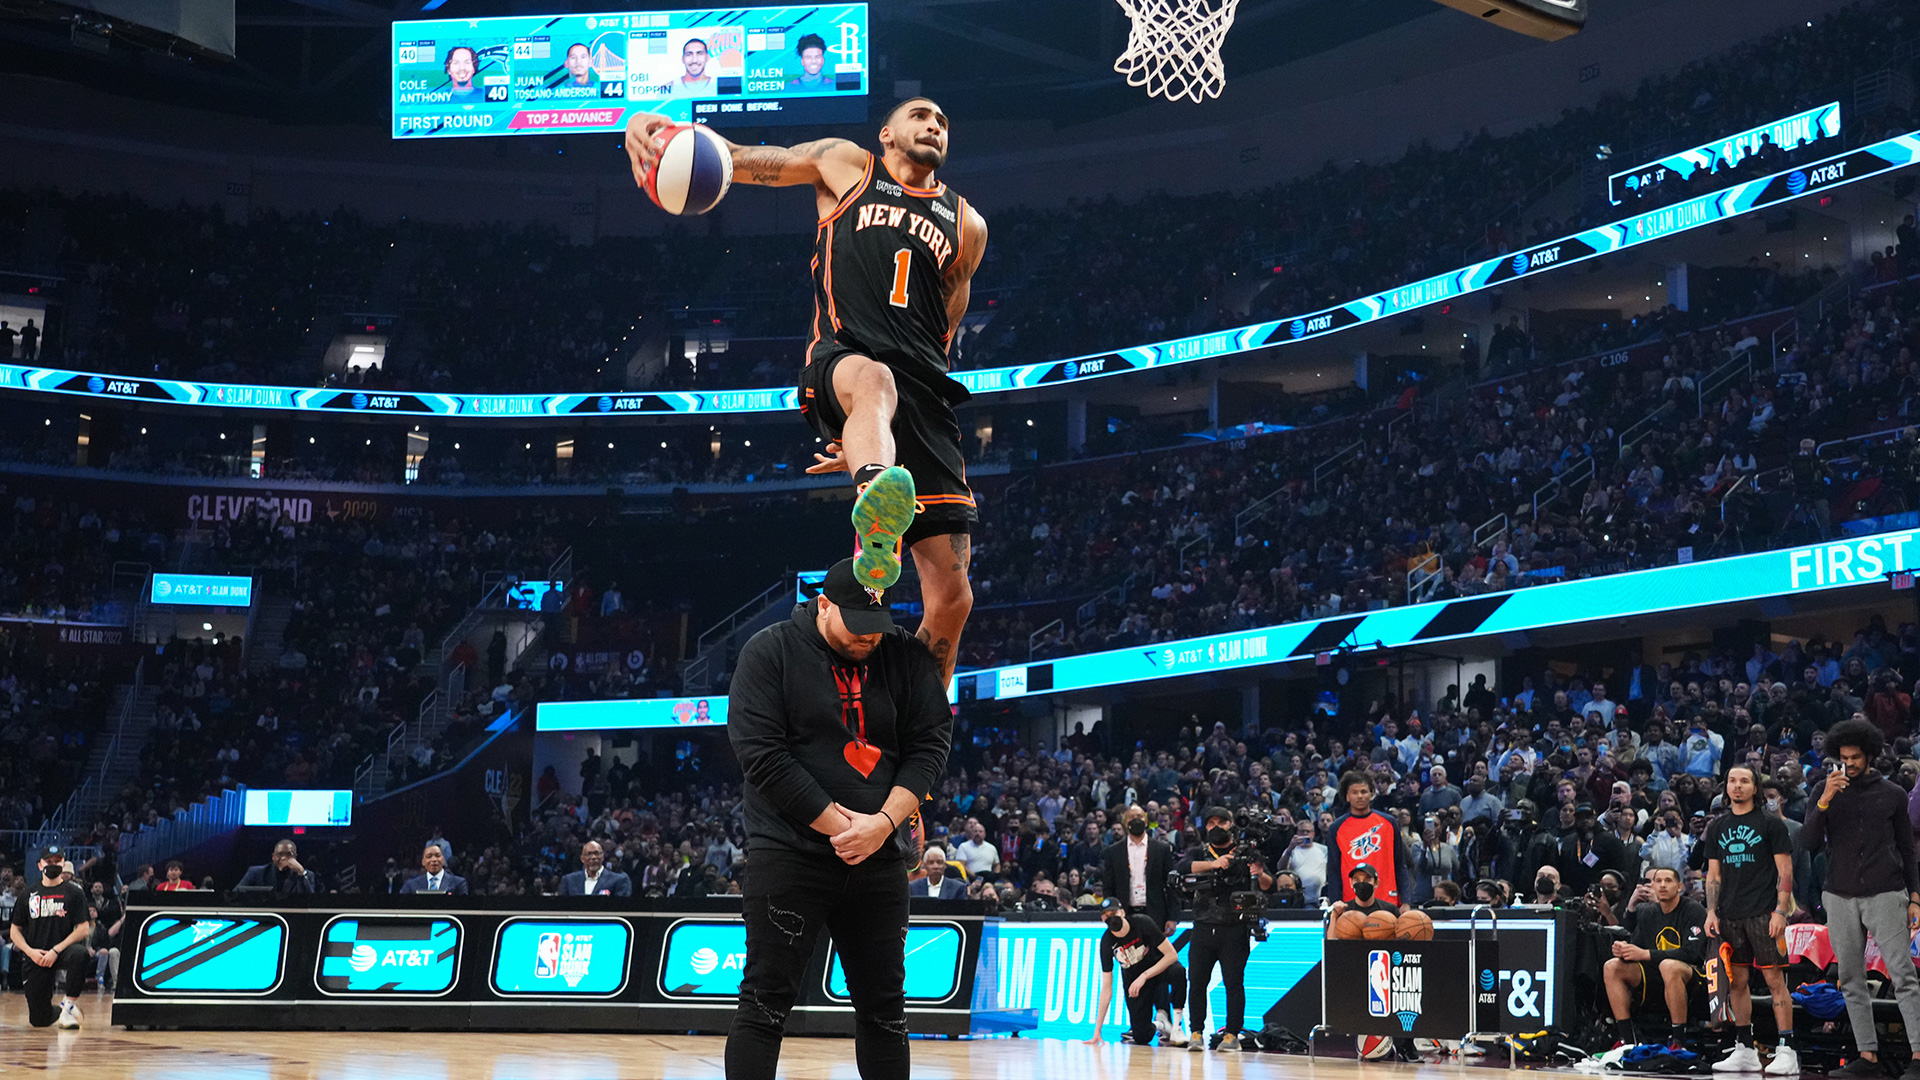 Obi Toppin: New York Knicks rookie, Ossining grad in NBA slam dunk contest